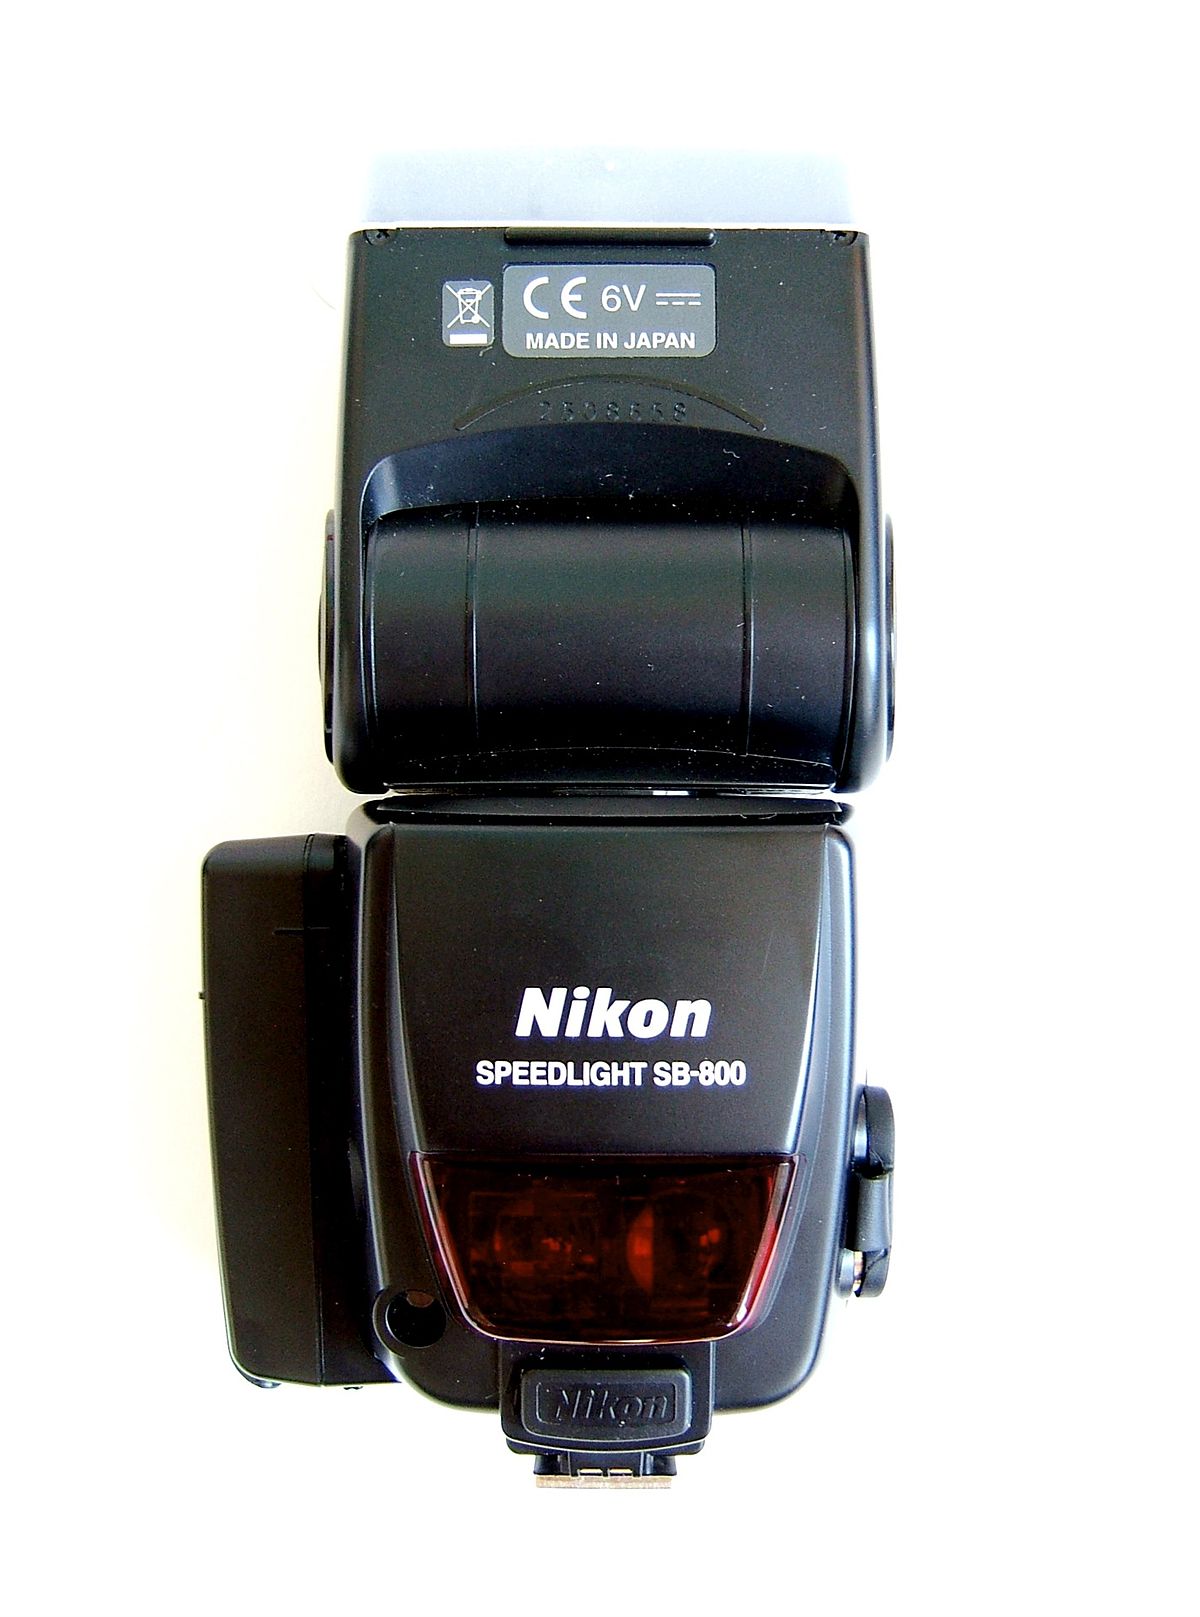 File:Nikon Speedlight SB-800.jpg - Wikimedia Commons